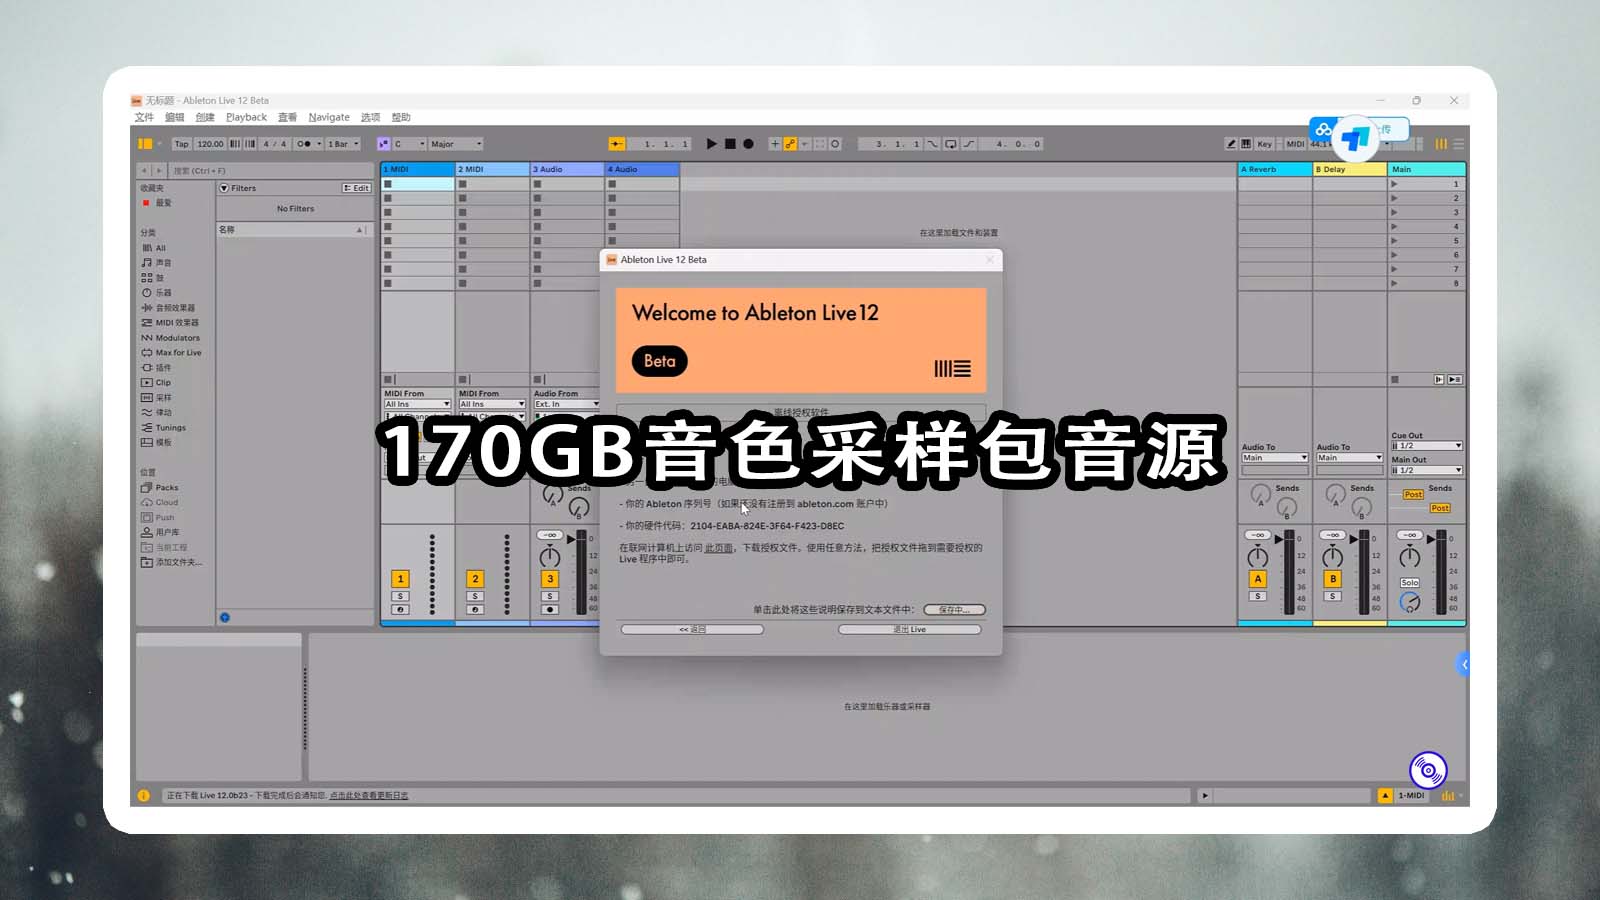 【Ableton完整音源套装】Ableton Live 12 最新完整音源套装！【170GB完整音源音色采样包套装】